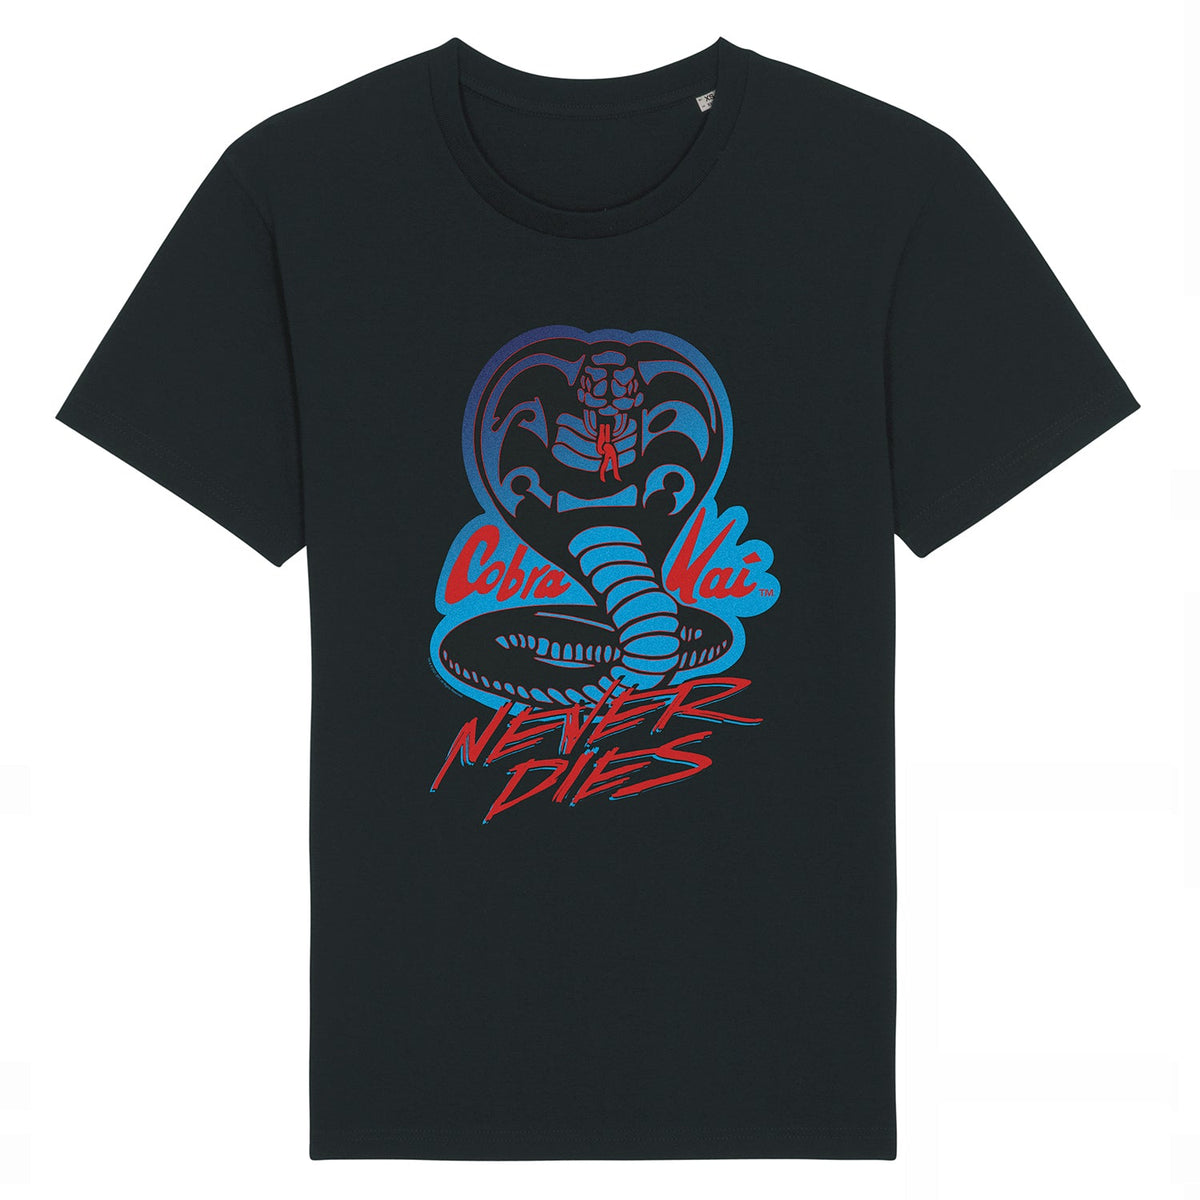 Cobra Kai Never Dies Black Kids T-Shirt